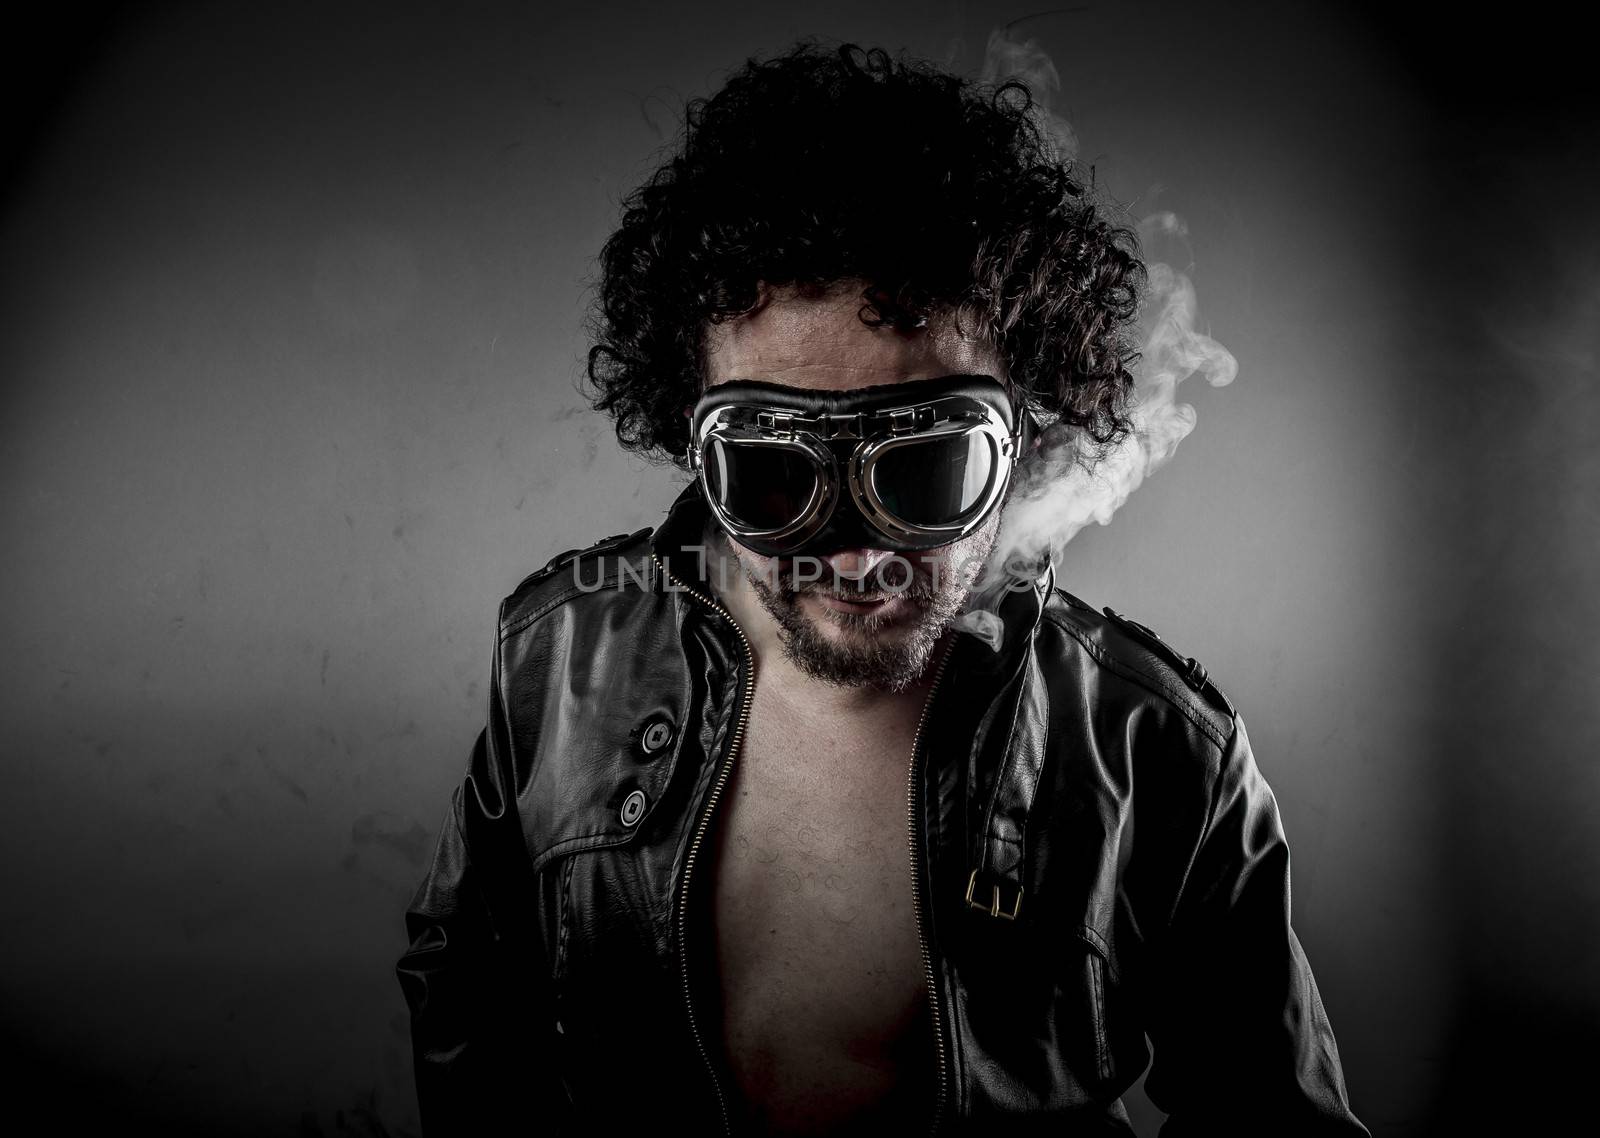 Sexy biker with sunglasses era dressed Leather jacket, huge smok by FernandoCortes